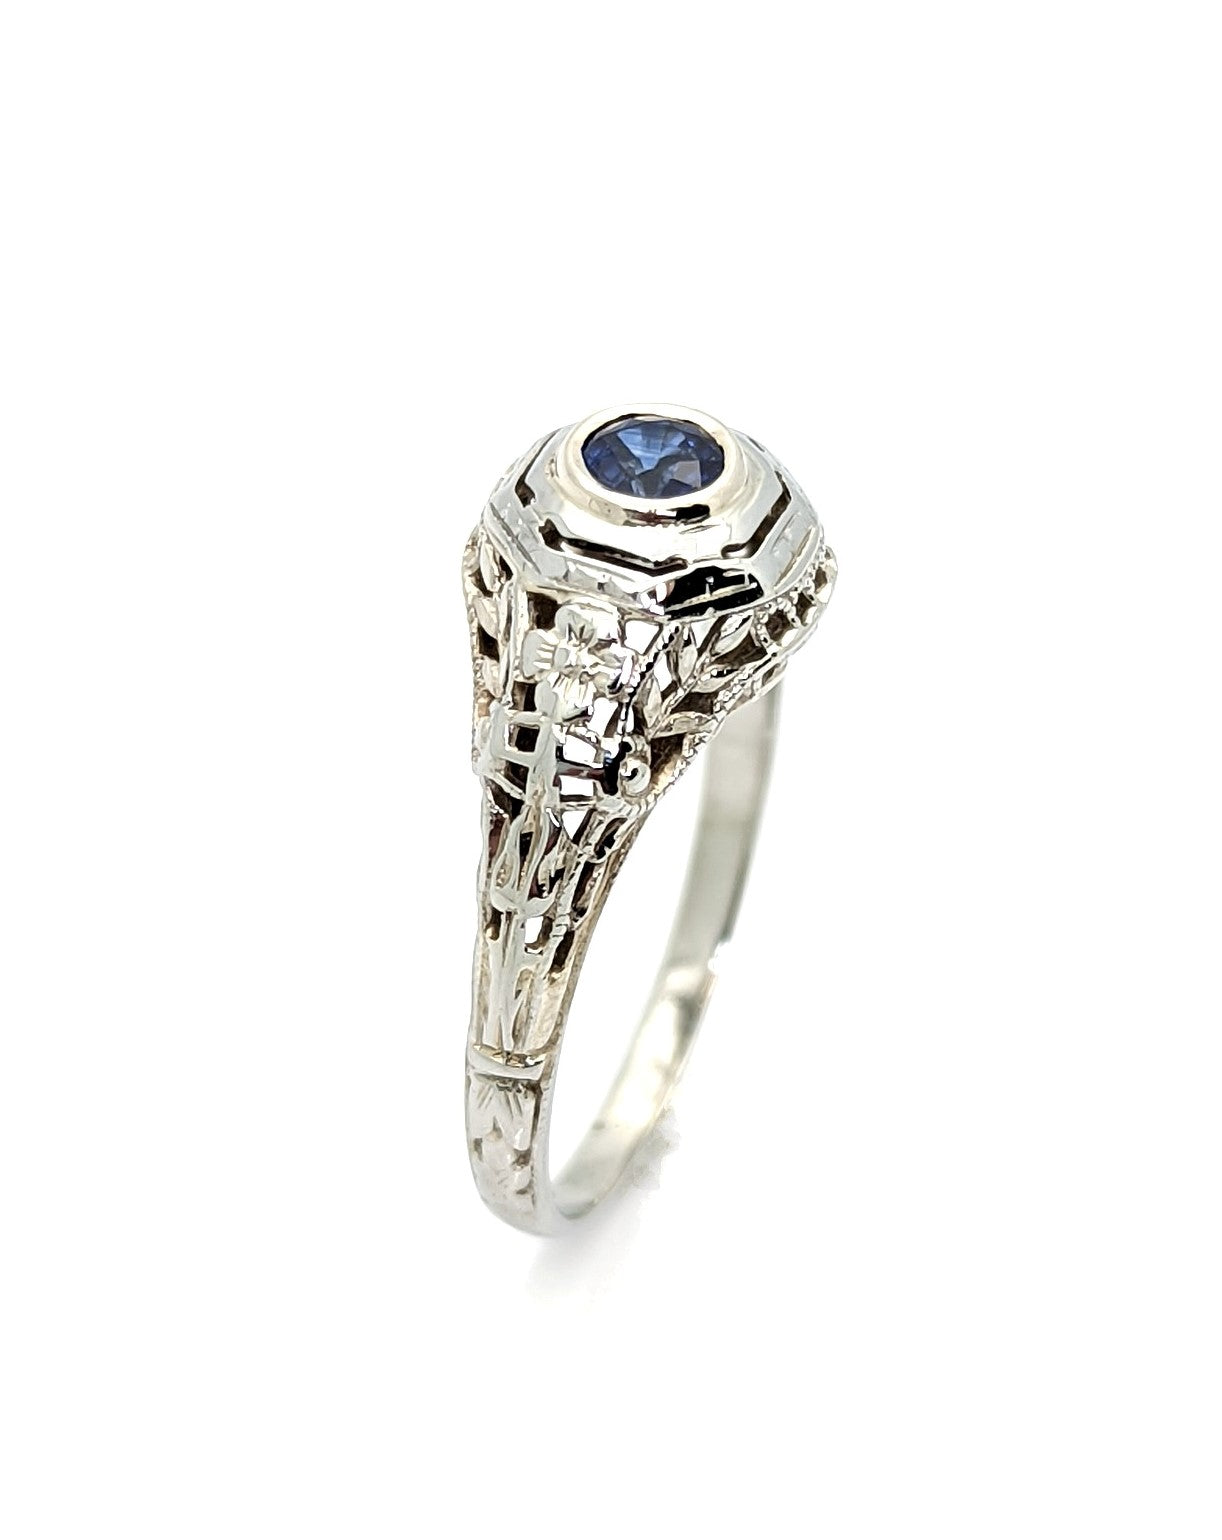 Vintage Art Deco 18K White Gold Filigree Sapphire Ring